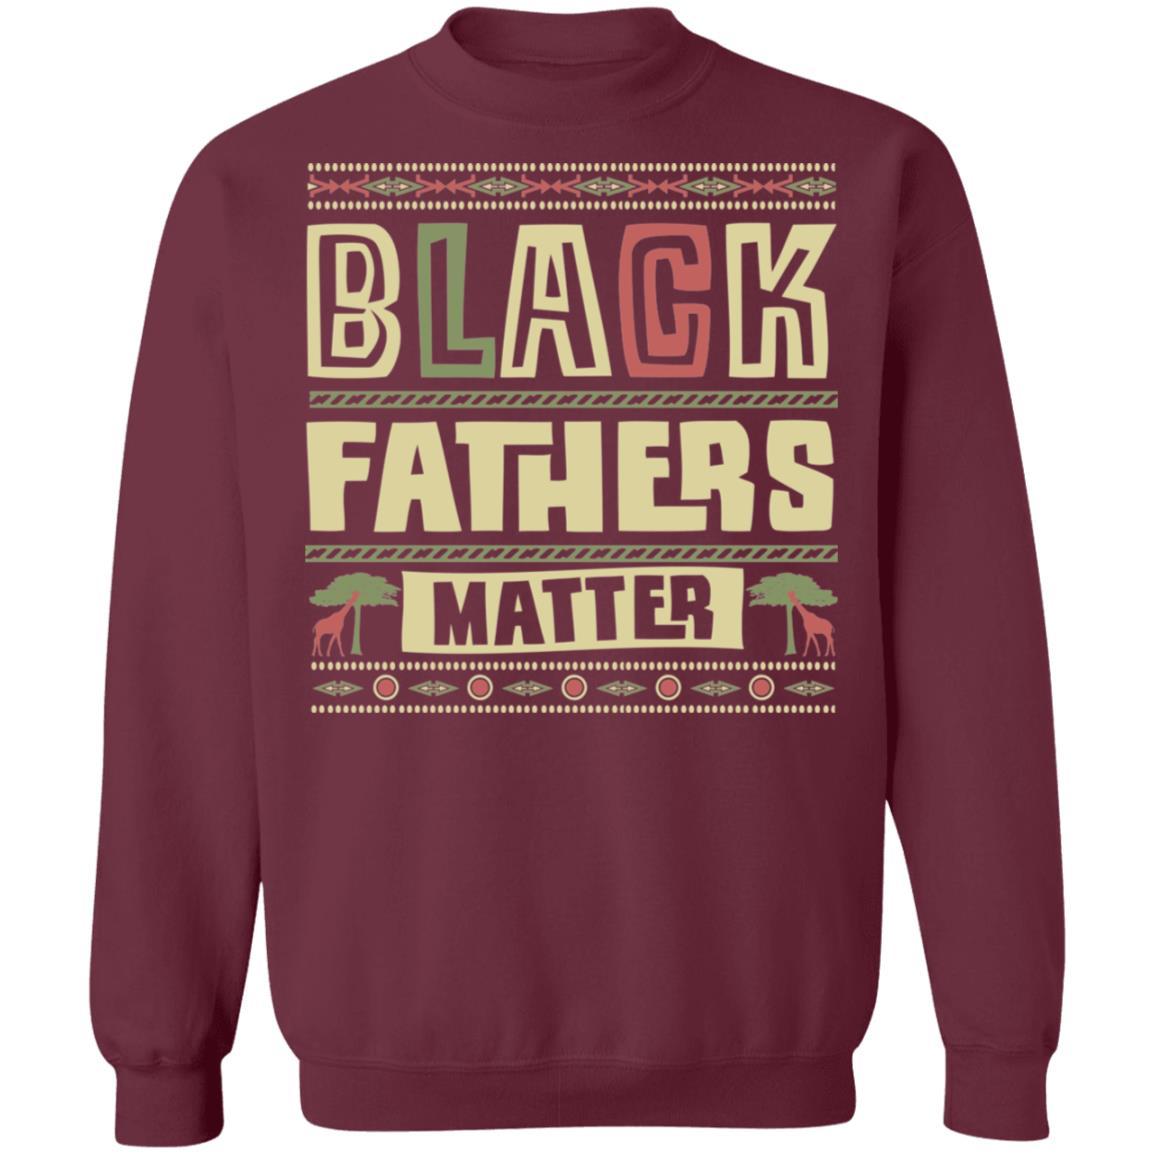 Black Fathers Matter Apparel CustomCat Crewneck Sweatshirt Maroon S